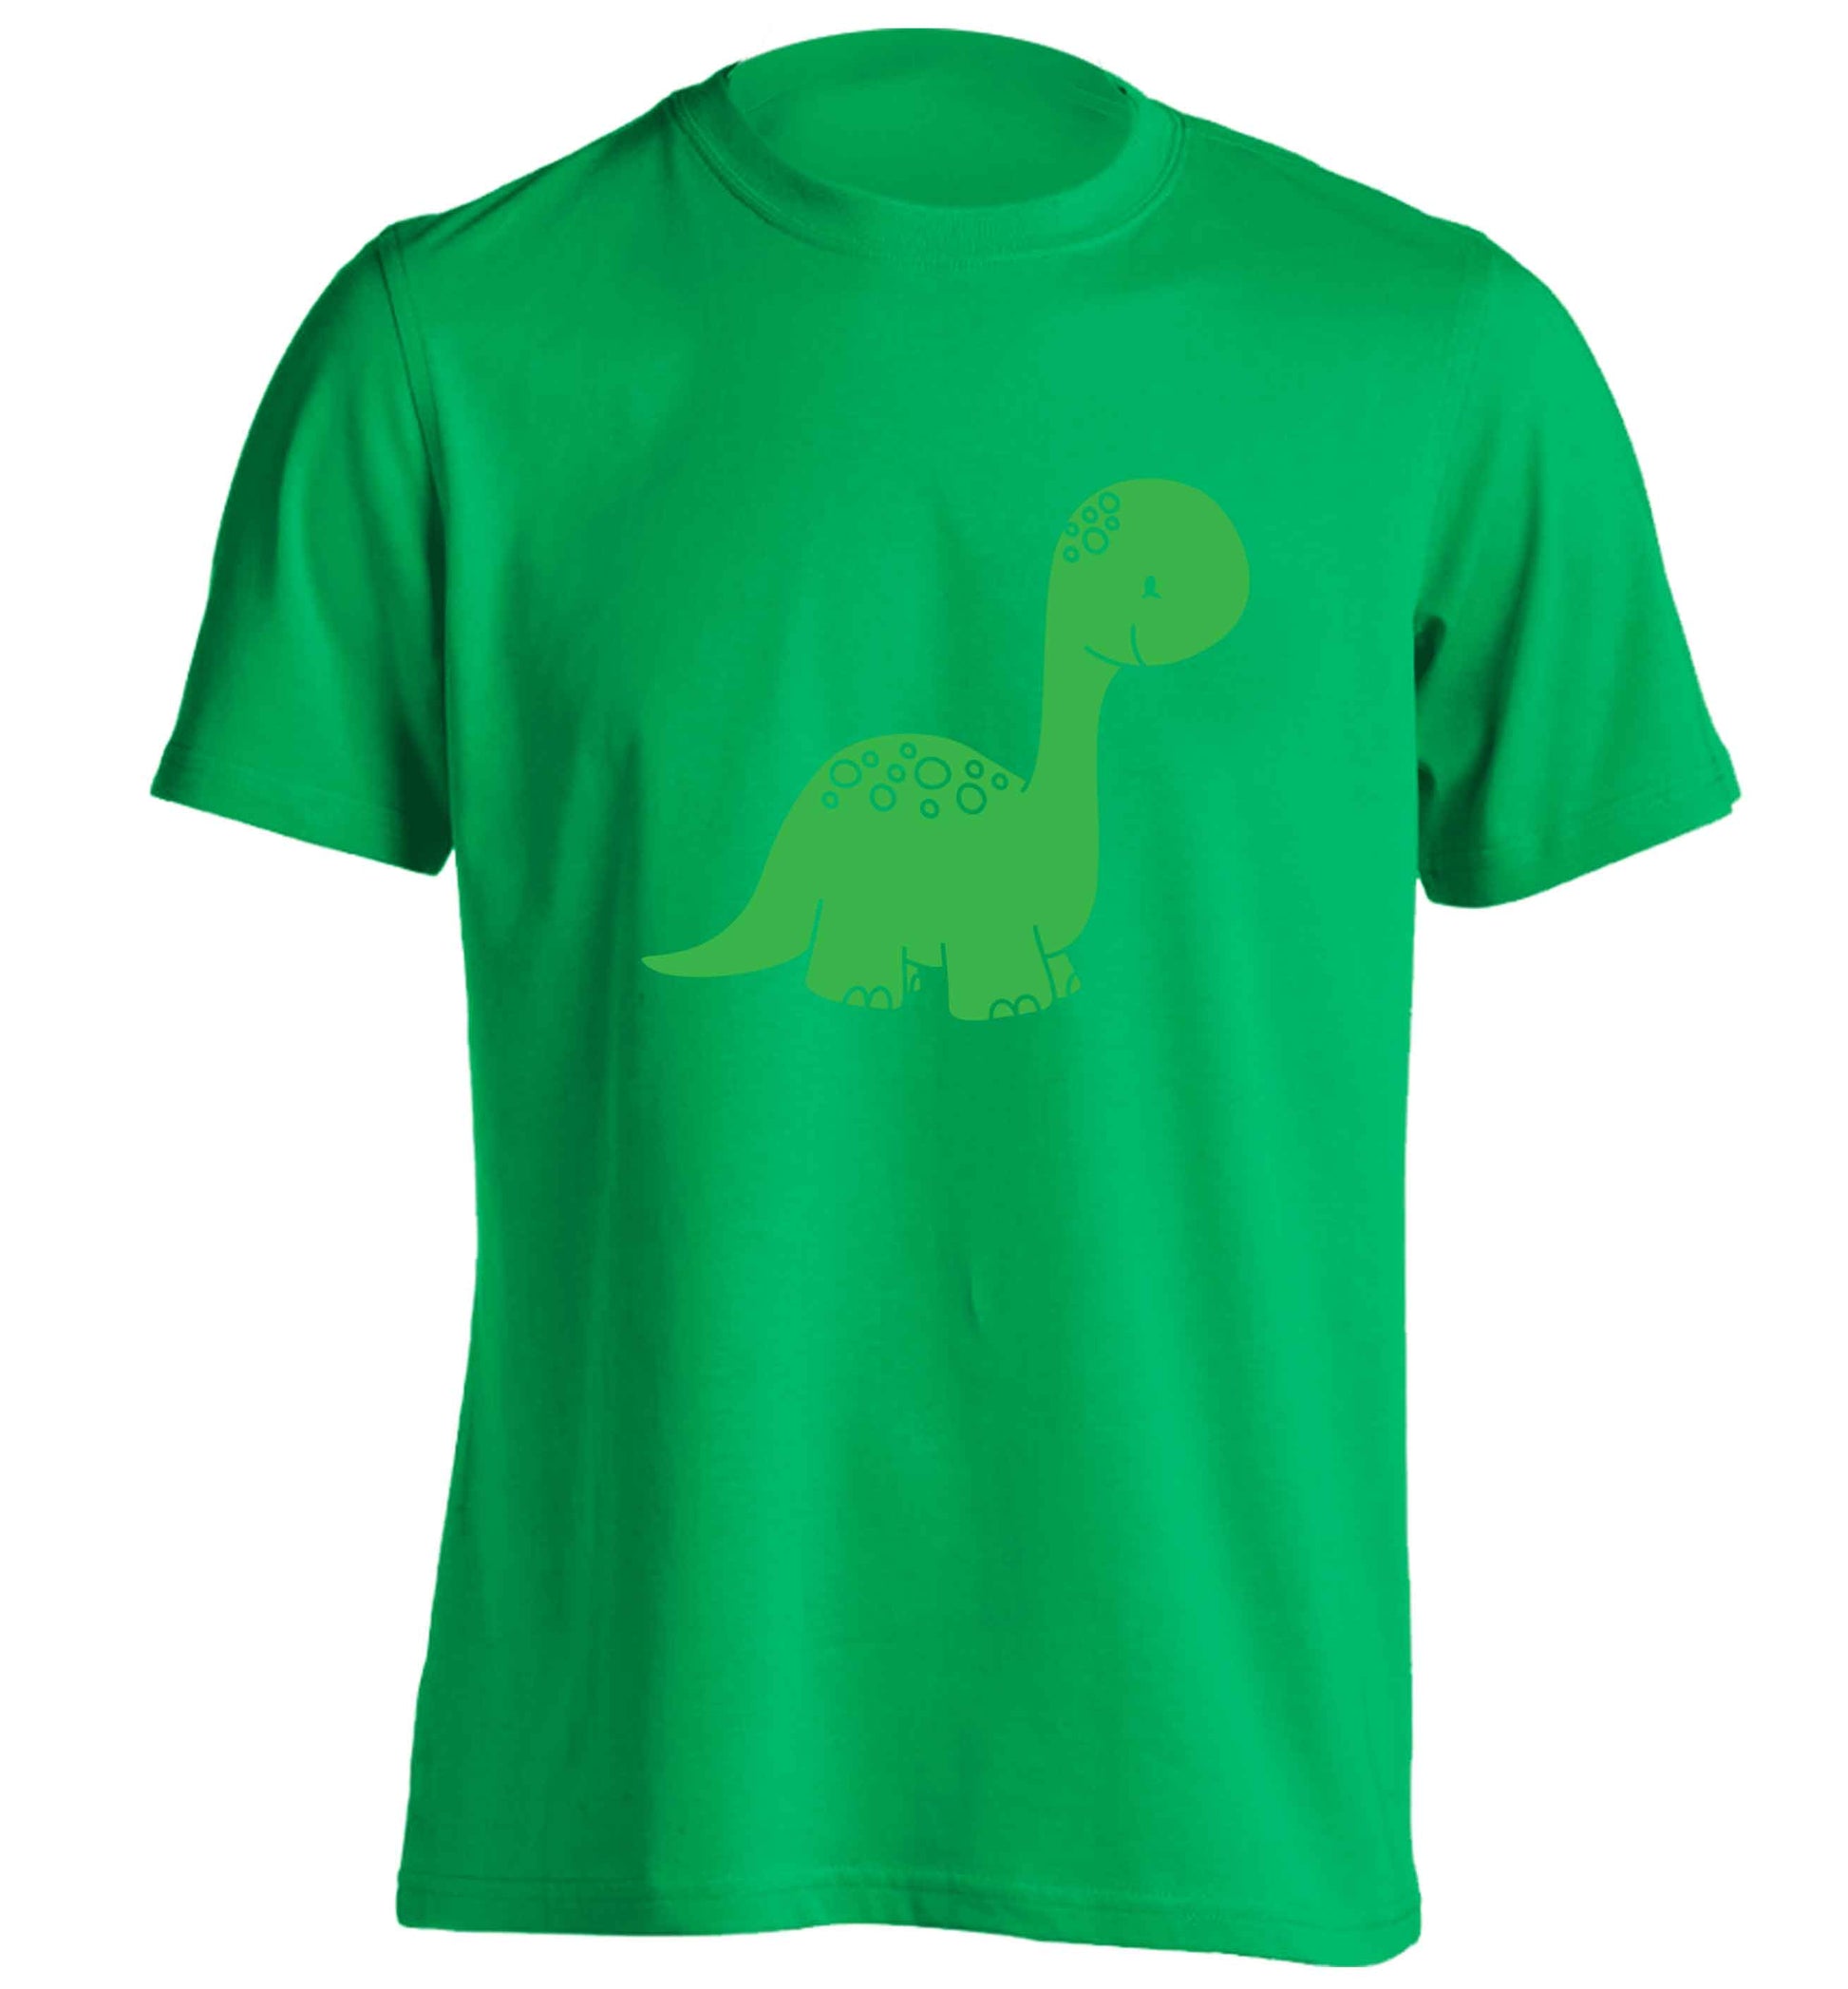 Dinosaur illustration adults unisex green Tshirt 2XL